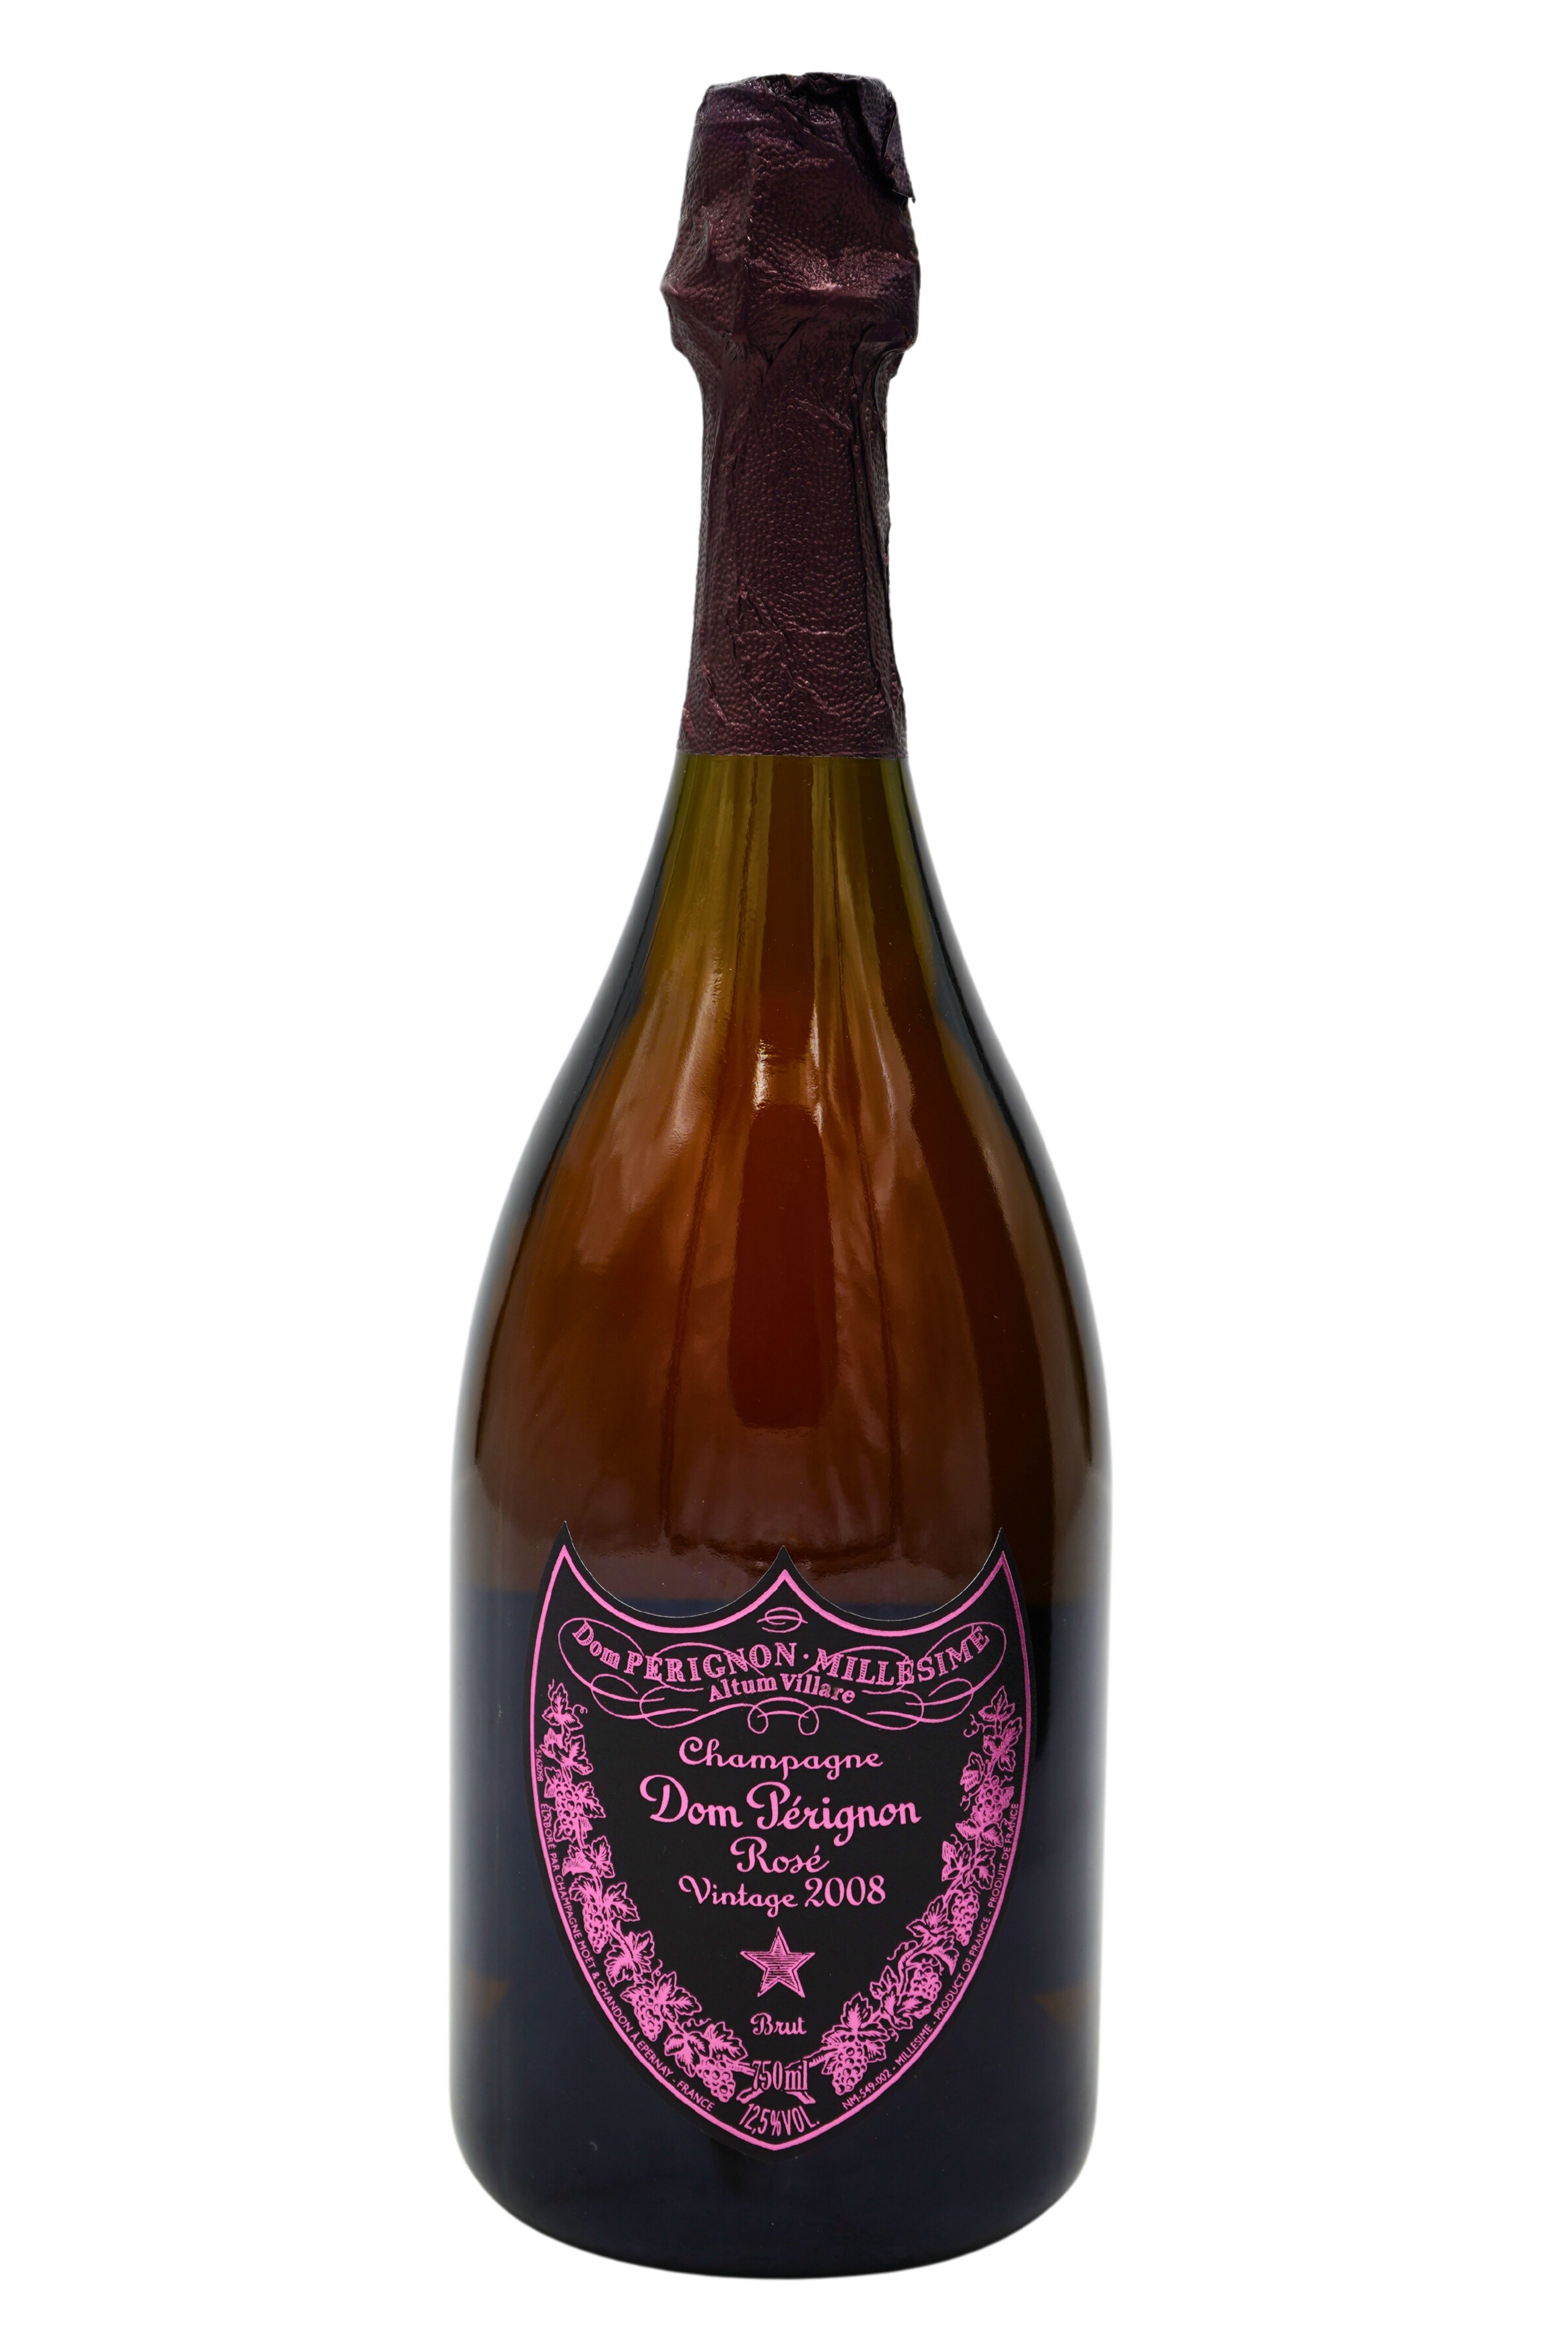 2008 Dom Pérignon Rosé im Geschenketui